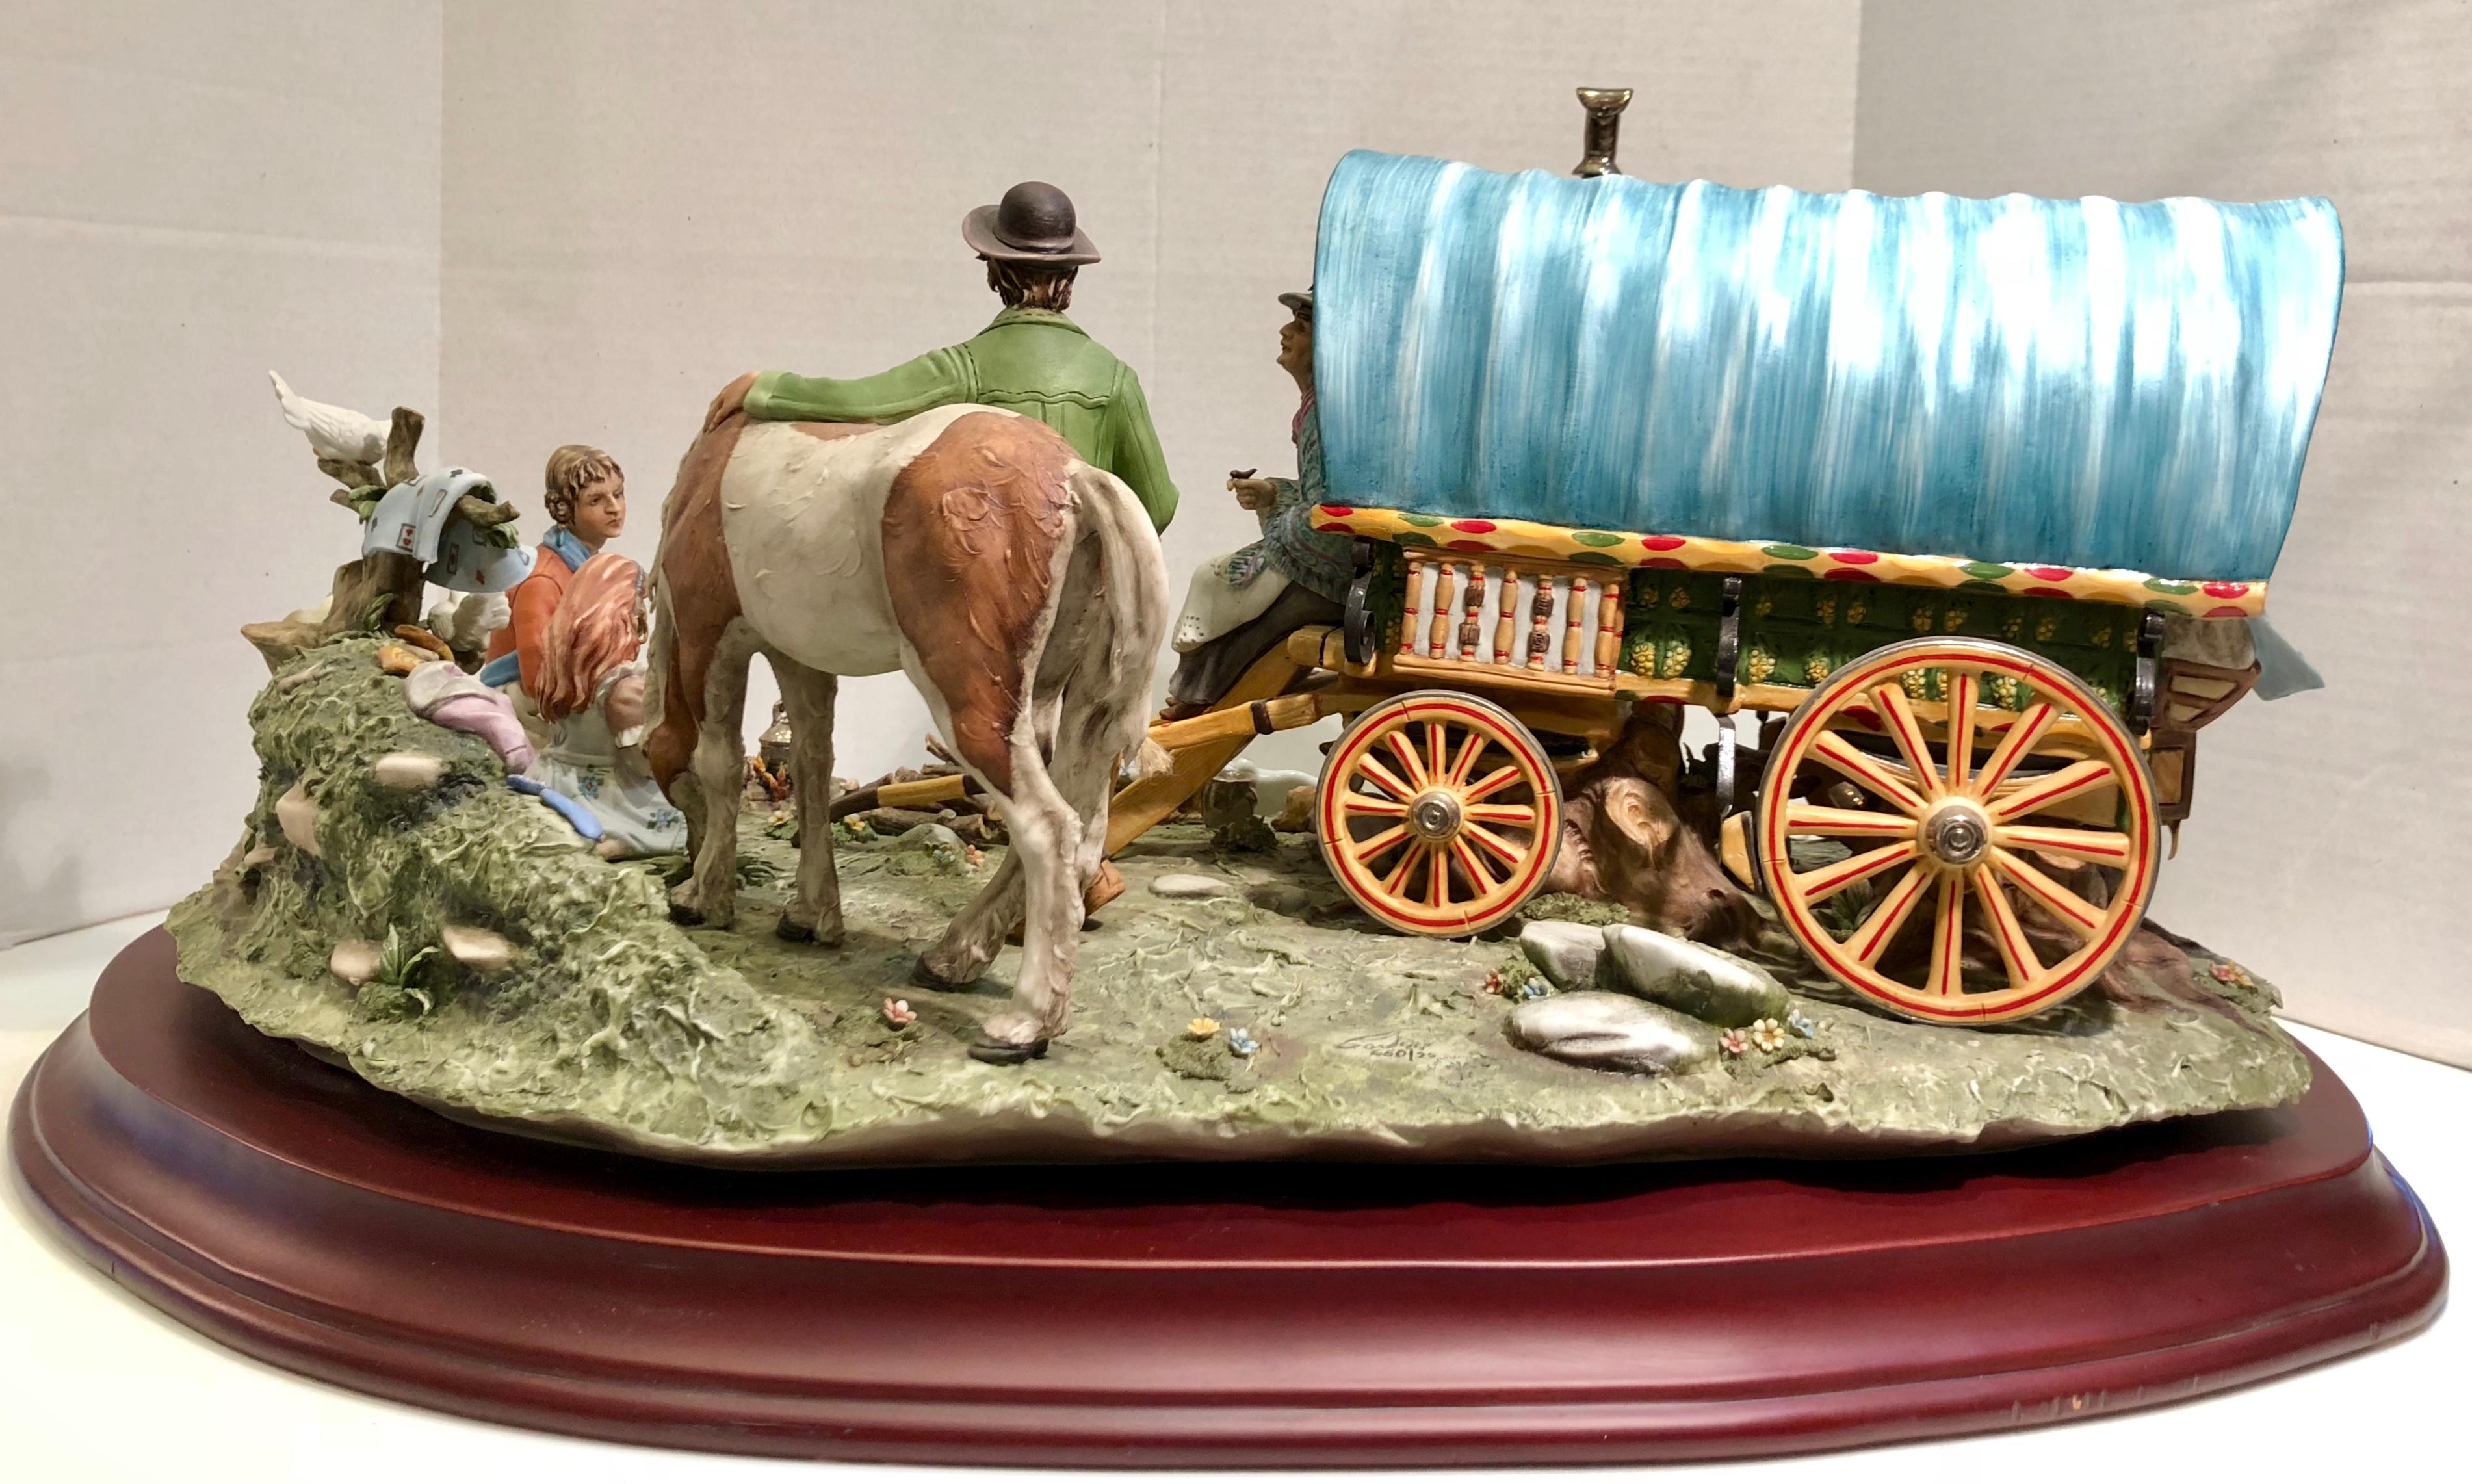 Finest Quality Capodimonte Gypsy Caravan Italian Porcelain Scene by Cortese 2